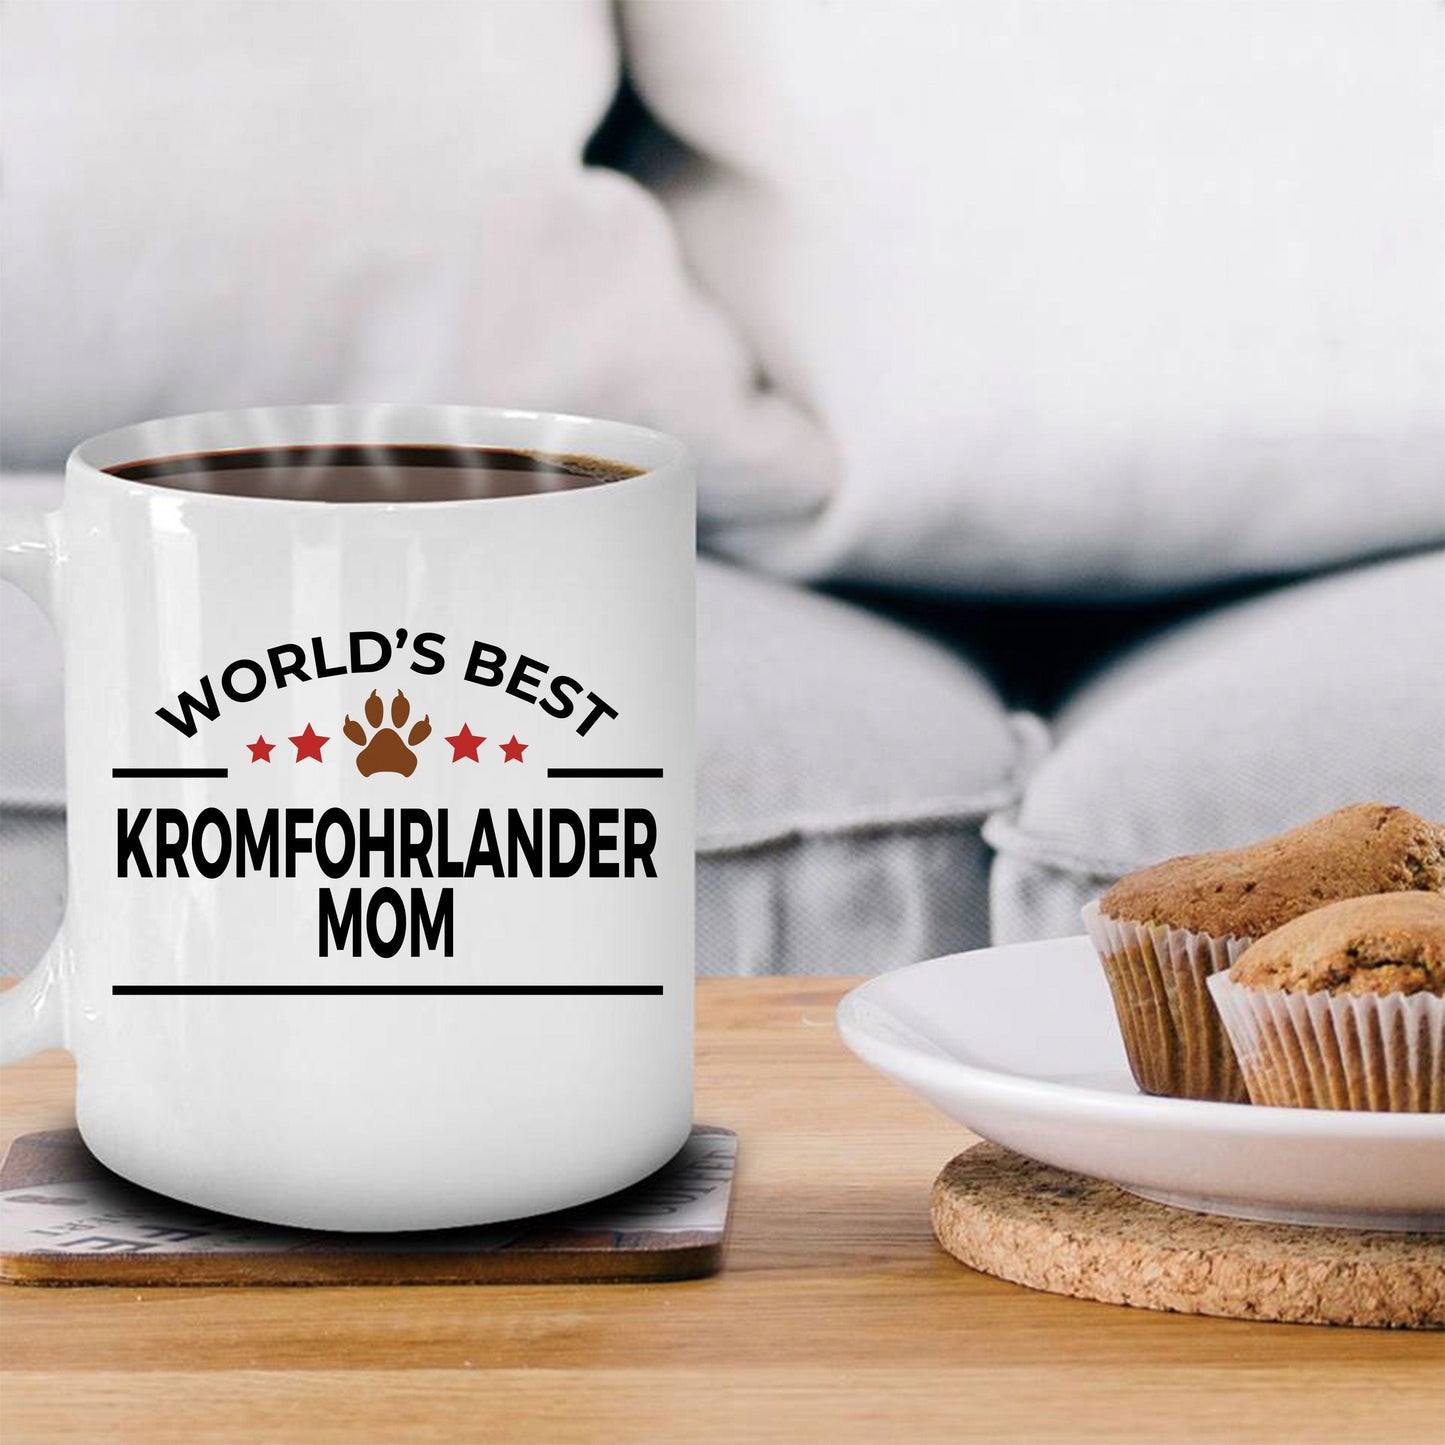 Kromfohrlander Dog Lover Gift World's Best Mom Birthday Mother's Day White Ceramic Coffee Mug